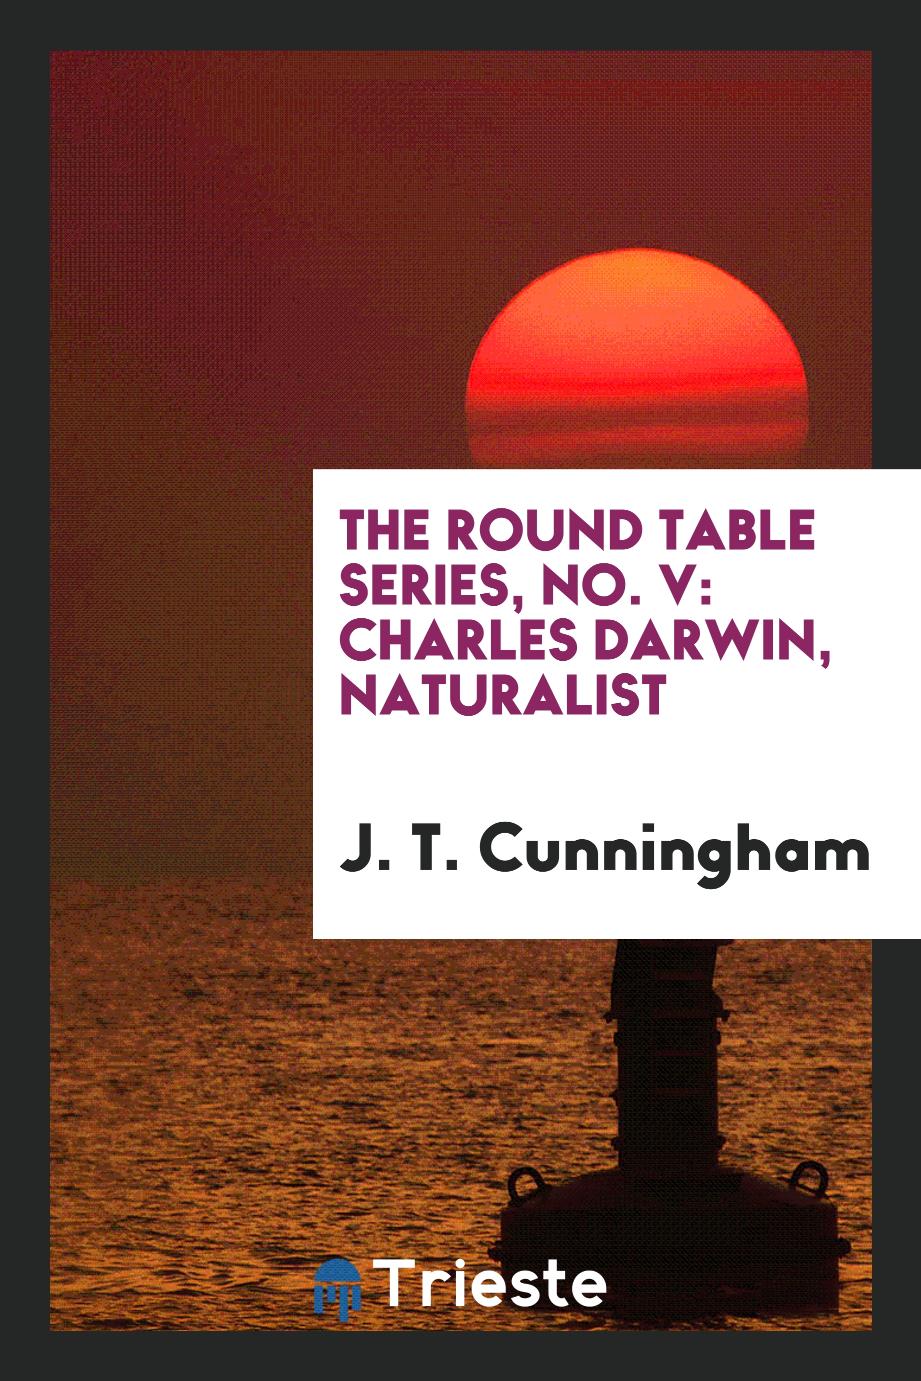 The round table series, No. V: Charles Darwin, Naturalist